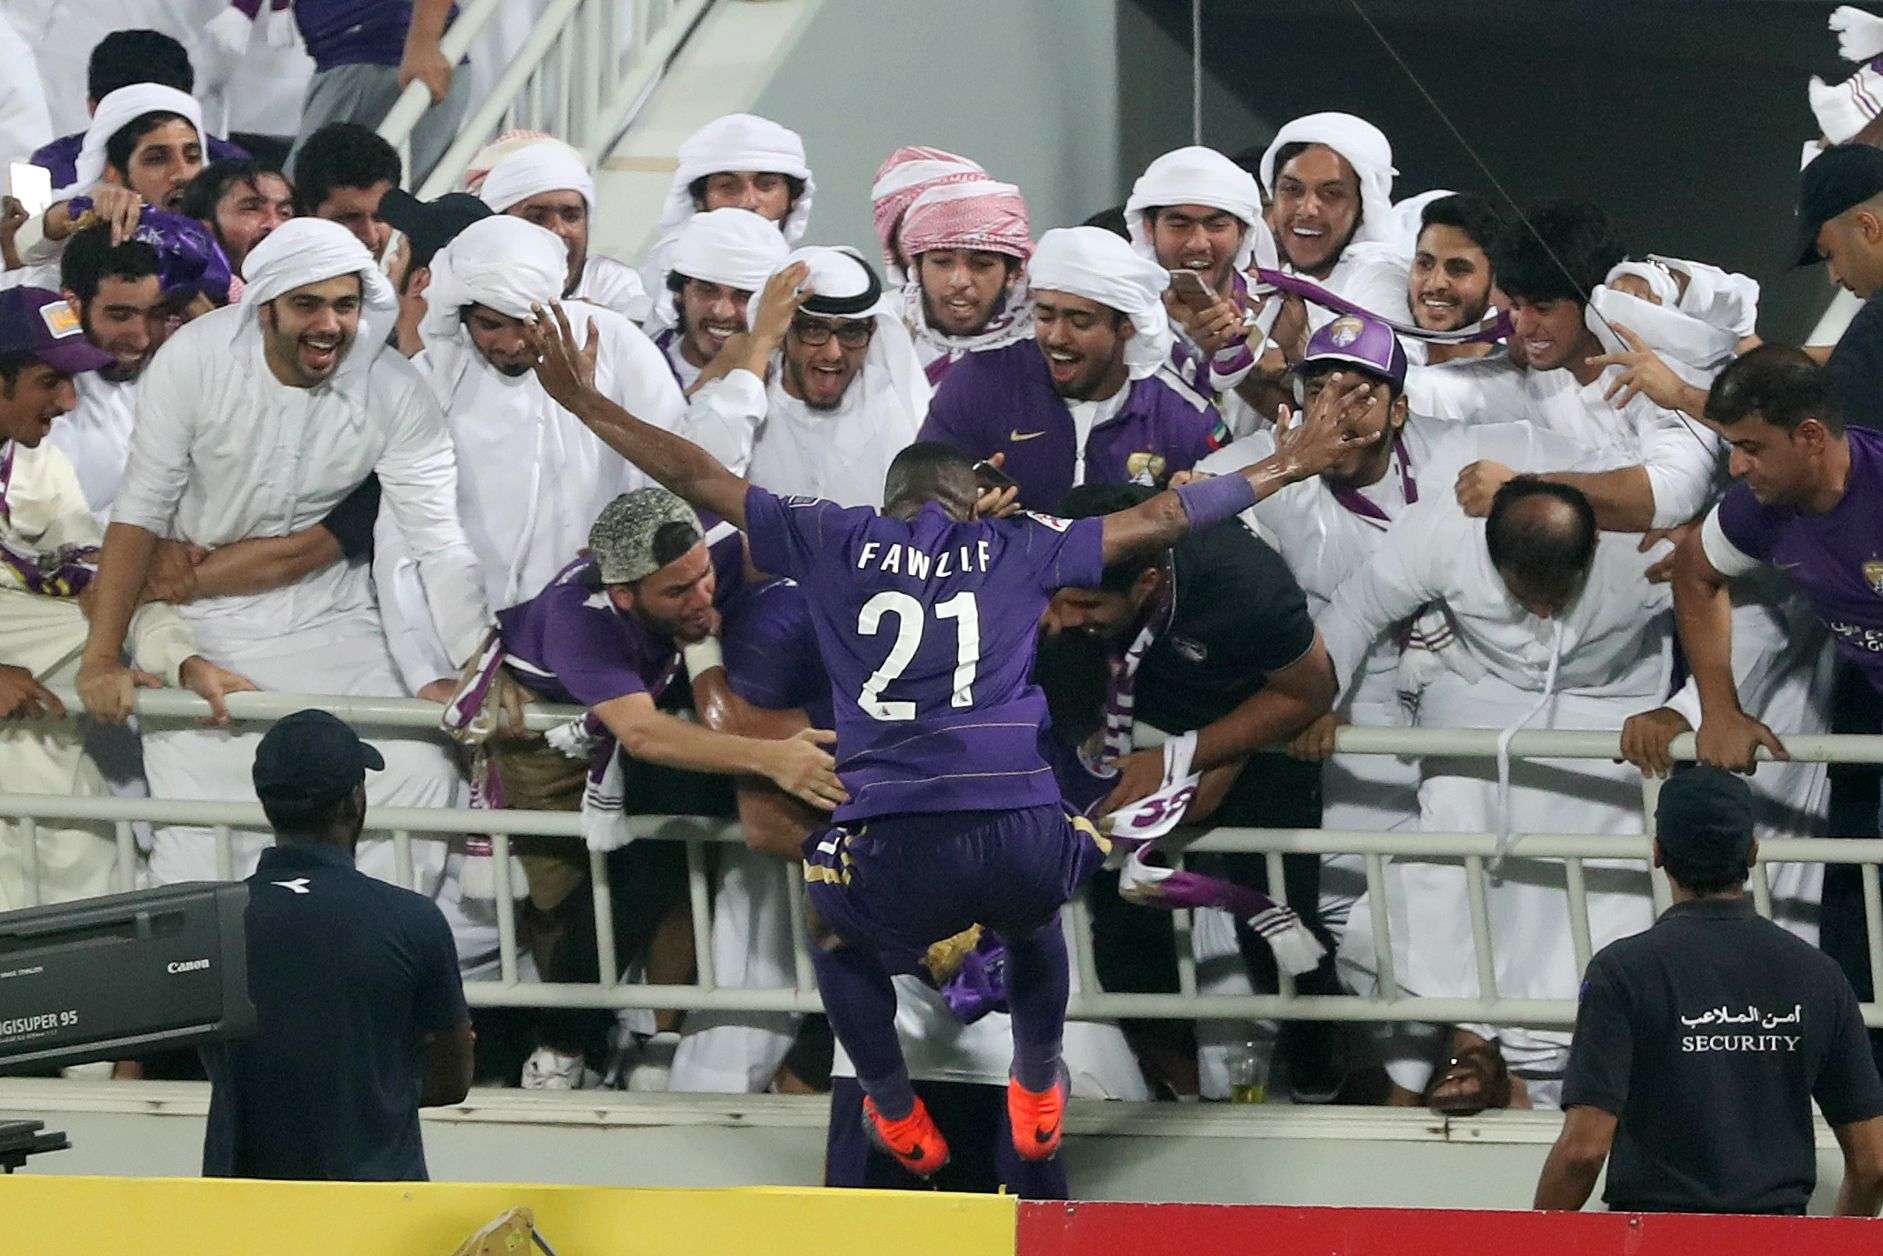 Al-Ain's Fawzi Fayez (C) celebrates during the Asian Champions League football return match between Qatar's El-Jaish and UAE's Al-Ain on October 18, 2016 at the Abdullah Bin Khalifa Stadium in Doha. / AFP PHOTO / KARIM JAAFAR